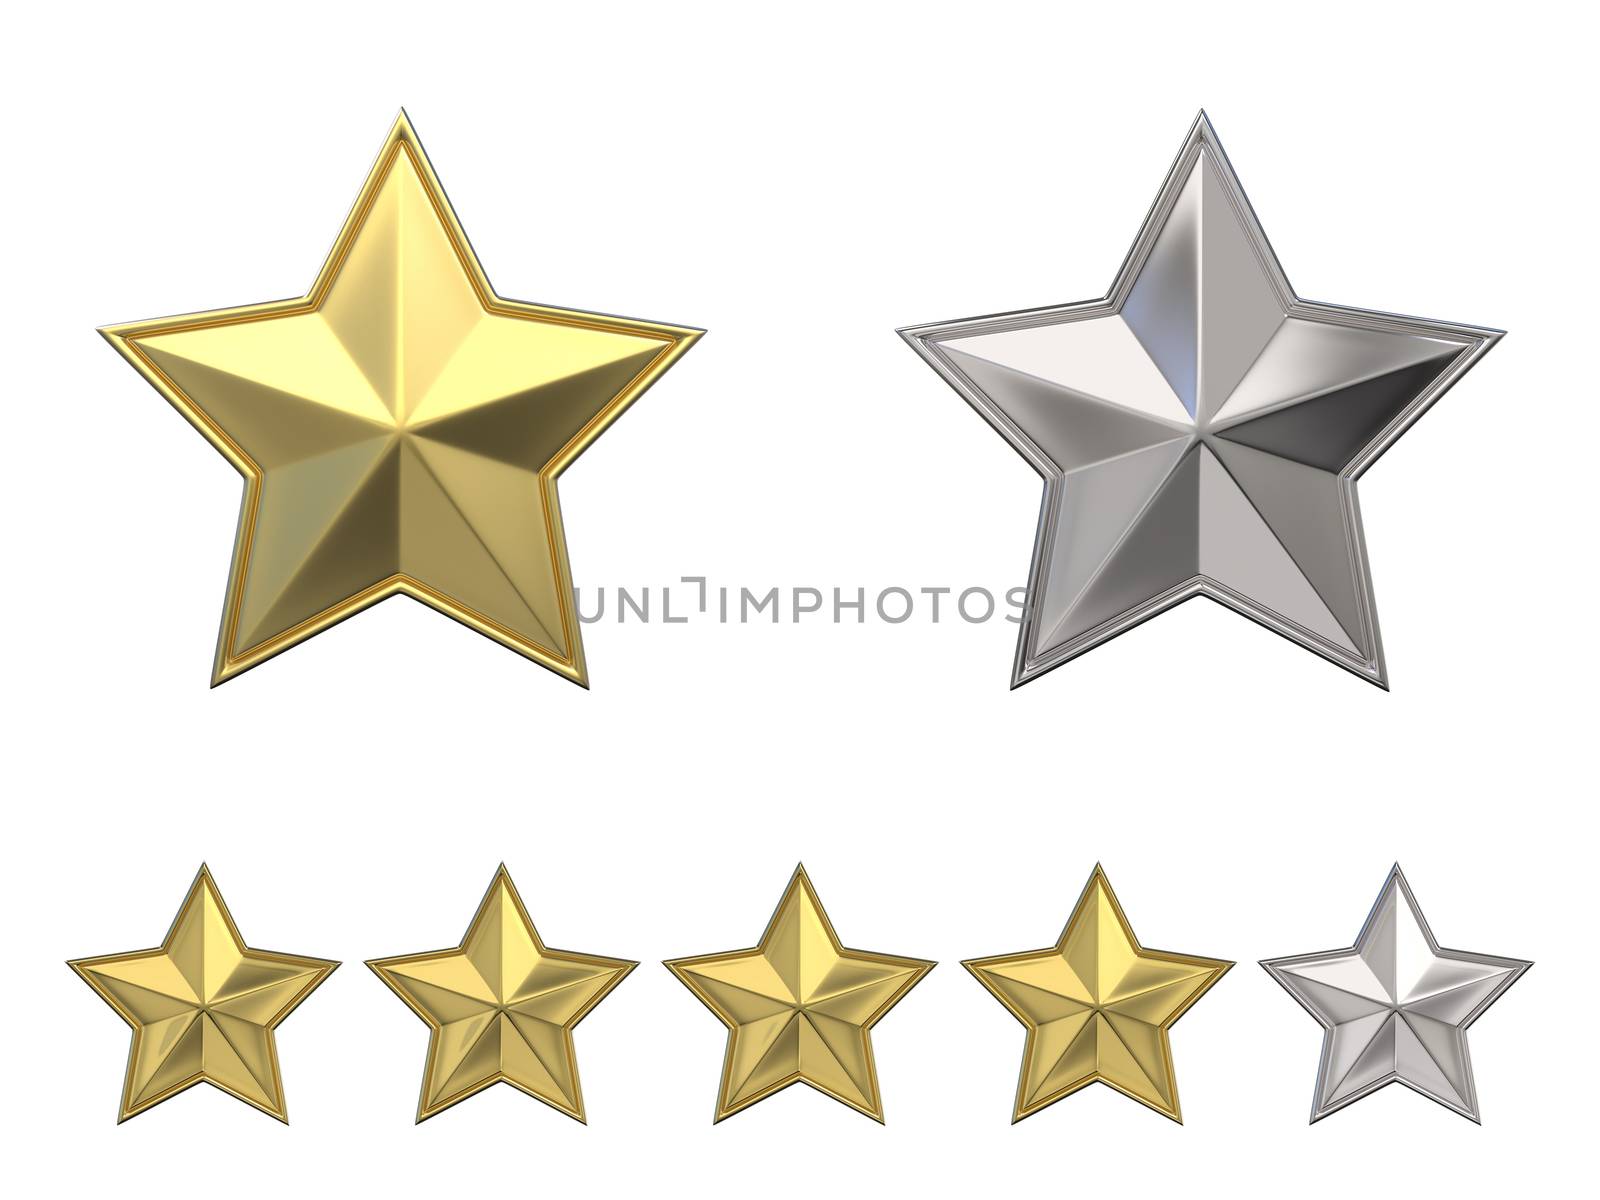 Voting concept. Rating four golden stars. 3D render illustration isolated on white background